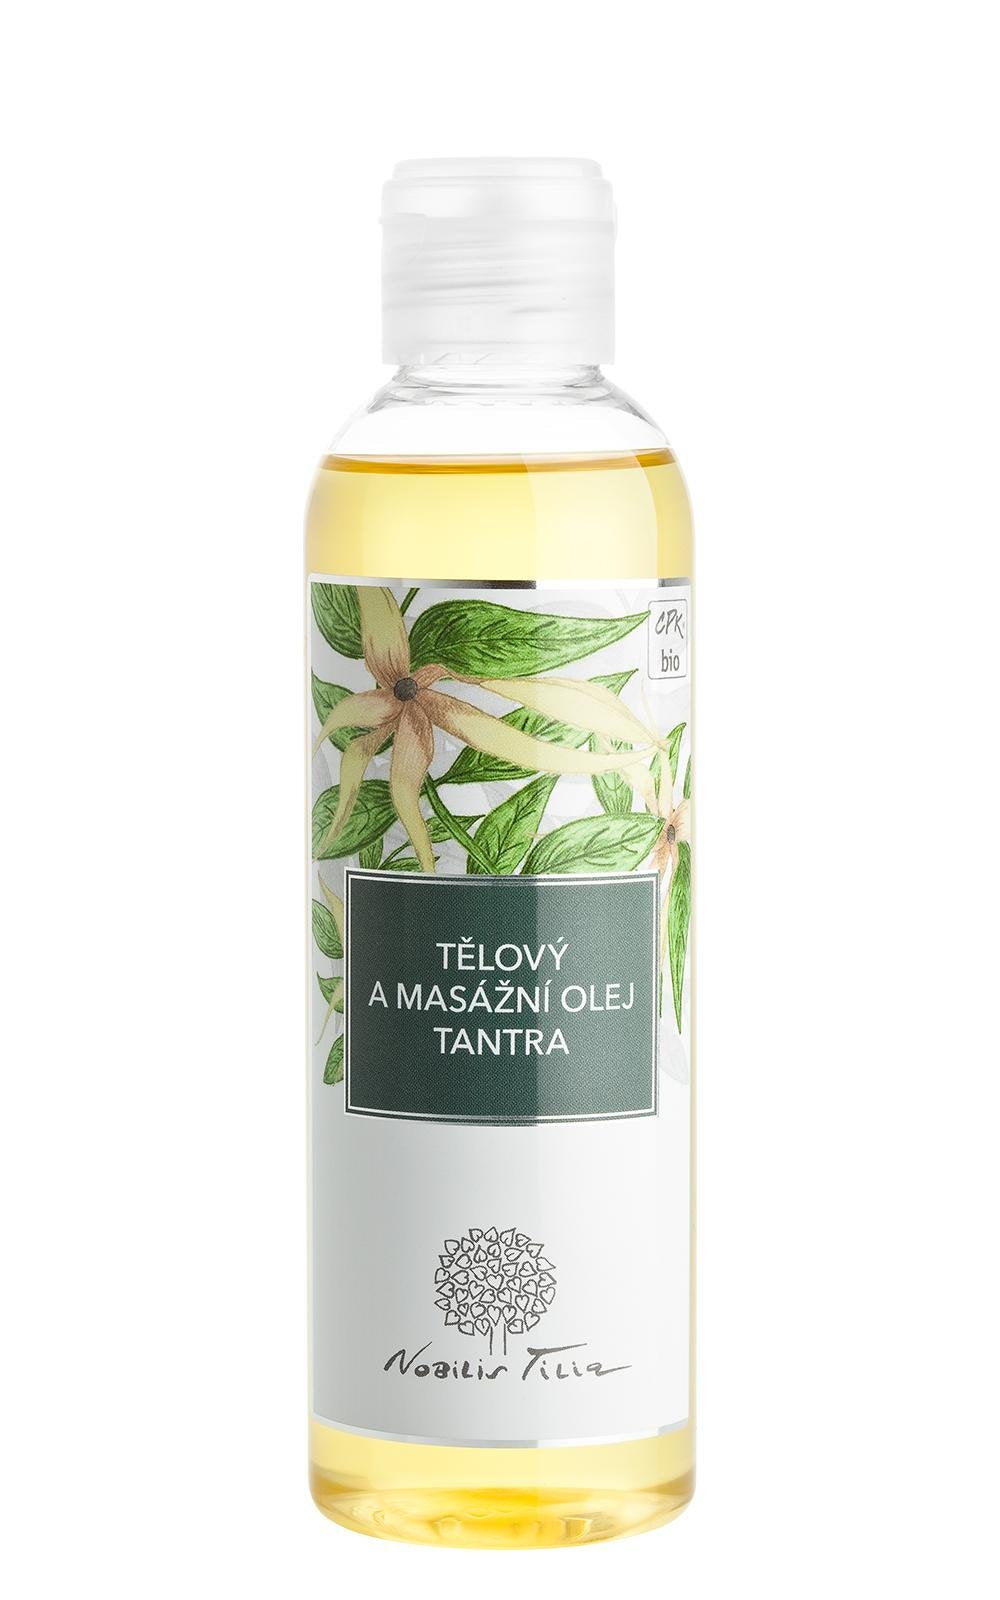 Nobilis Tilia Tělový a masážní olej Tantra BIO (200 ml) Nobilis Tilia